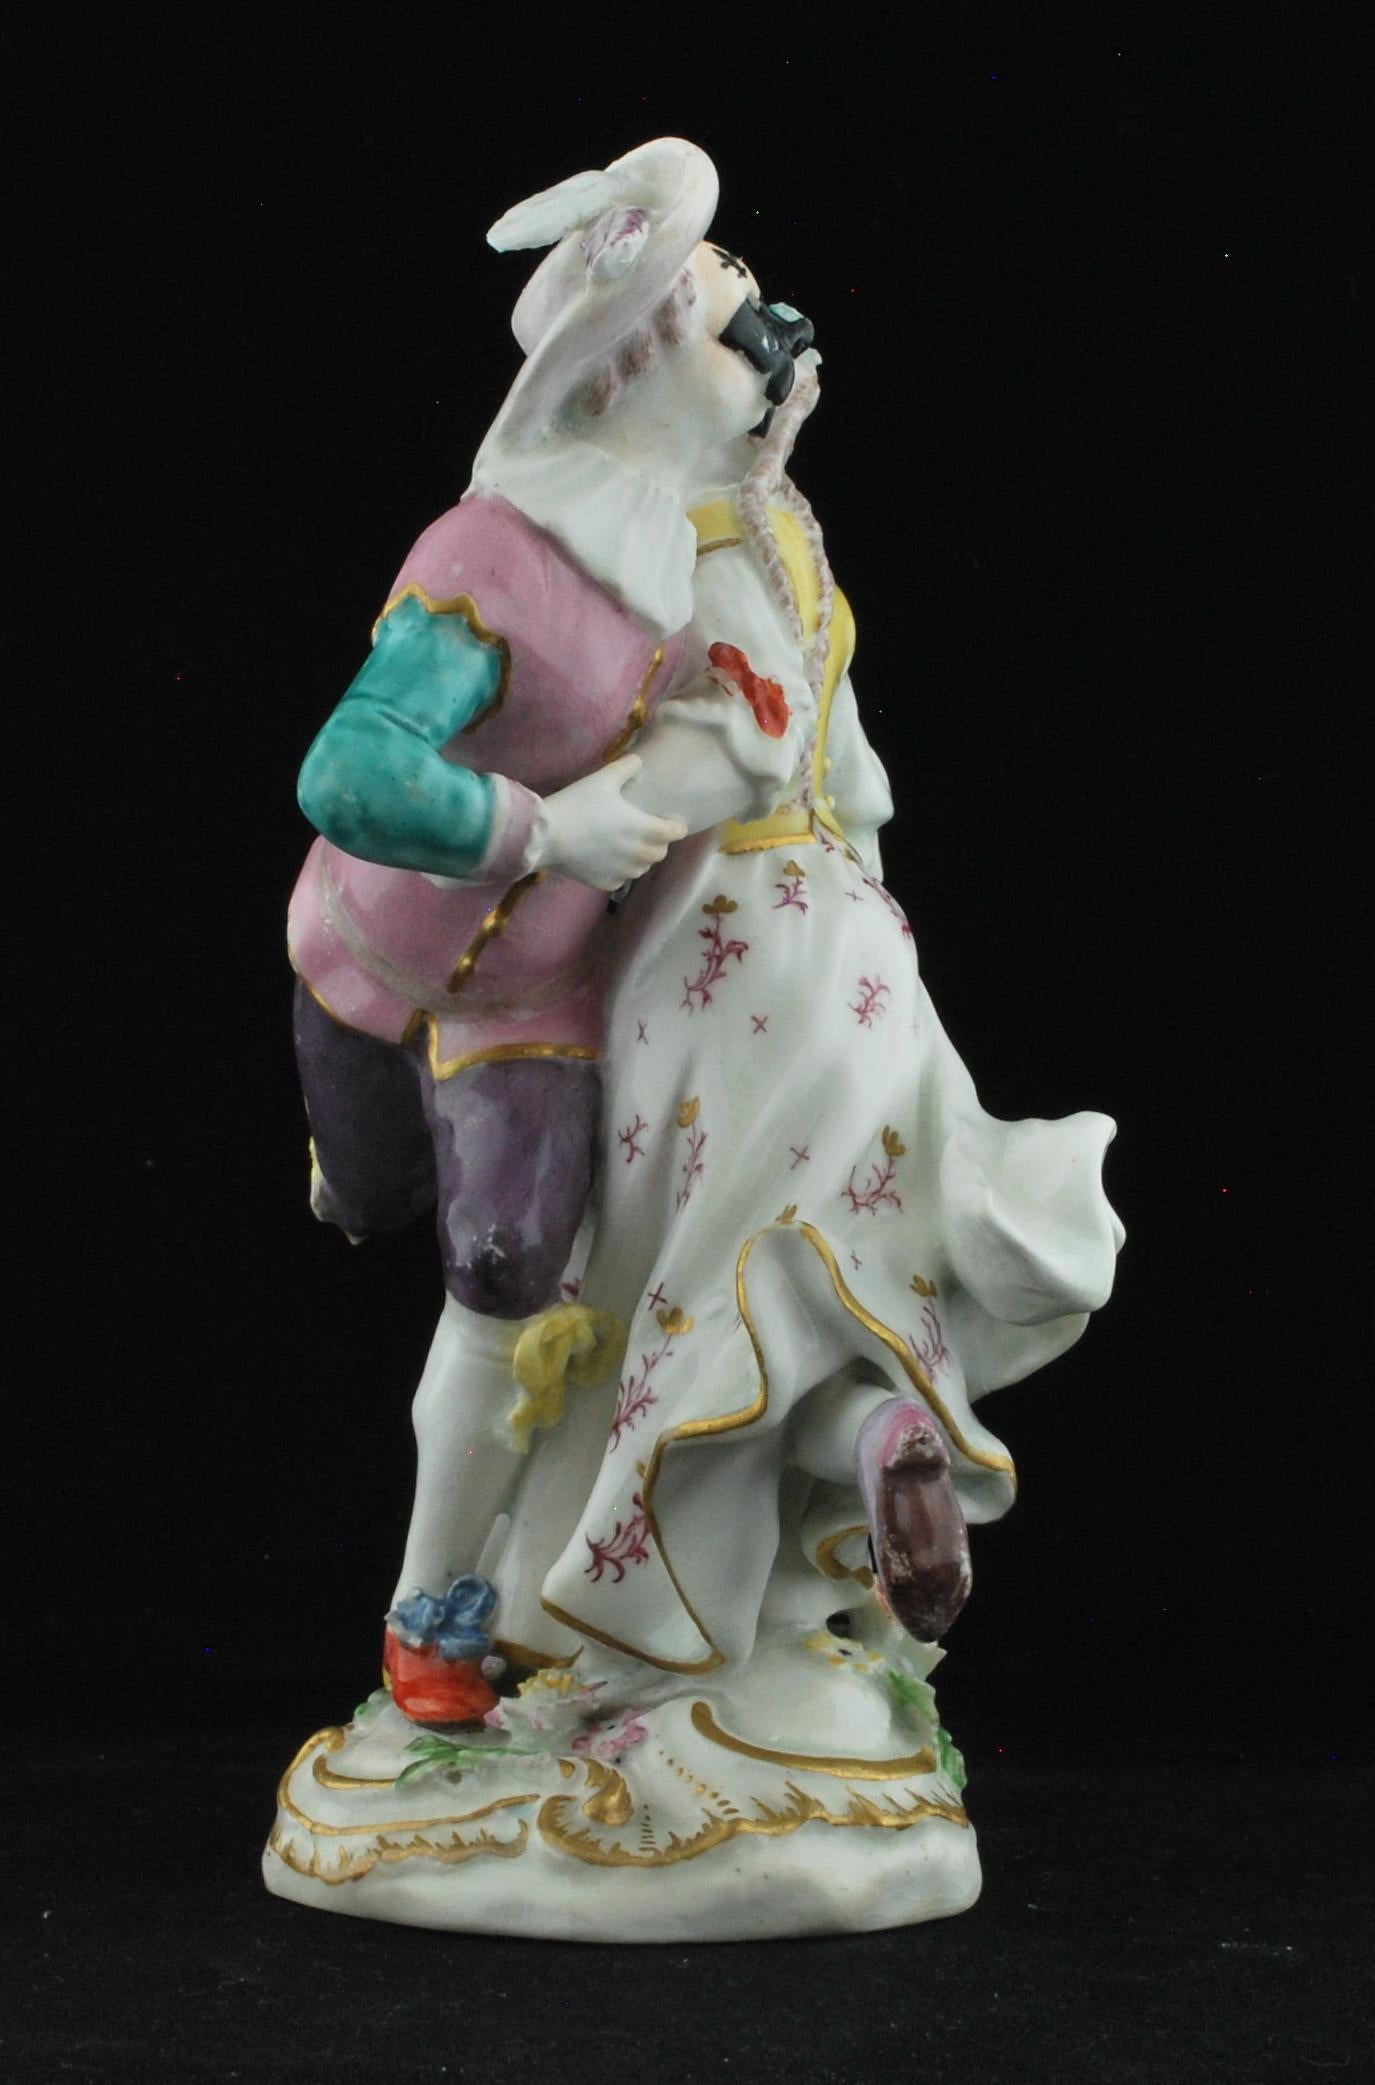 harlequin and columbine figurines